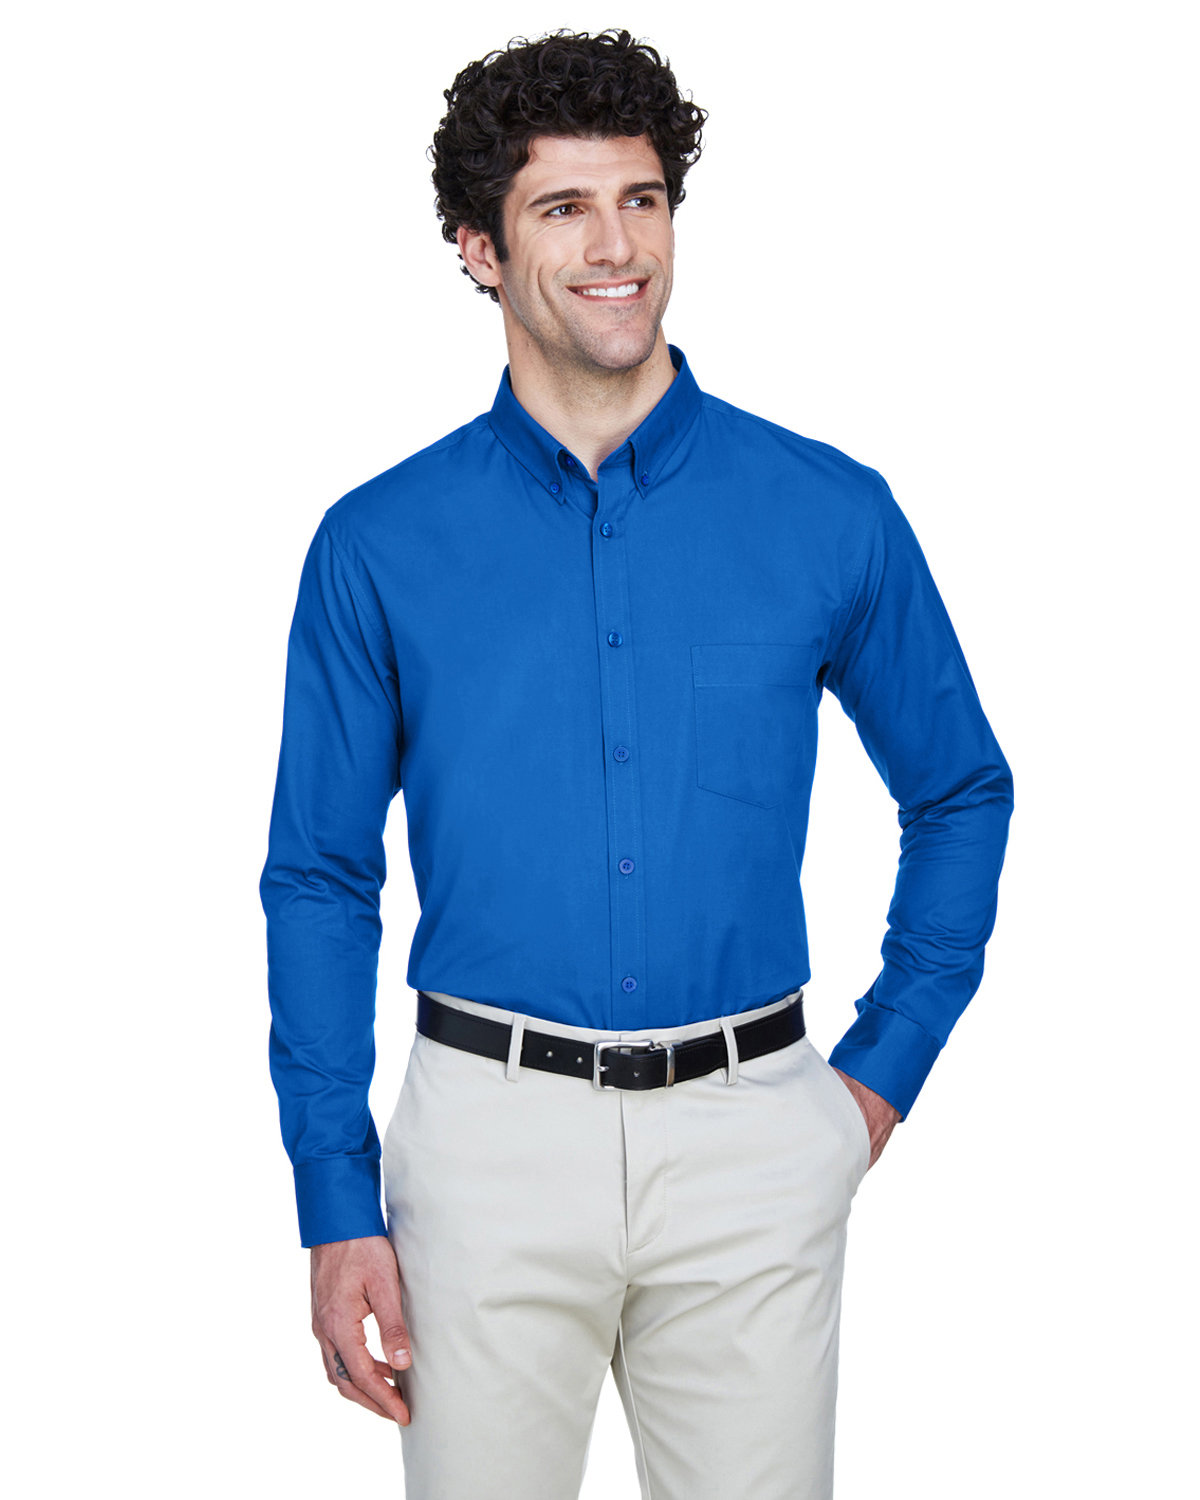 Core 365 Men's Operate Long-Sleeve Twill Shirt TRUE ROYAL 